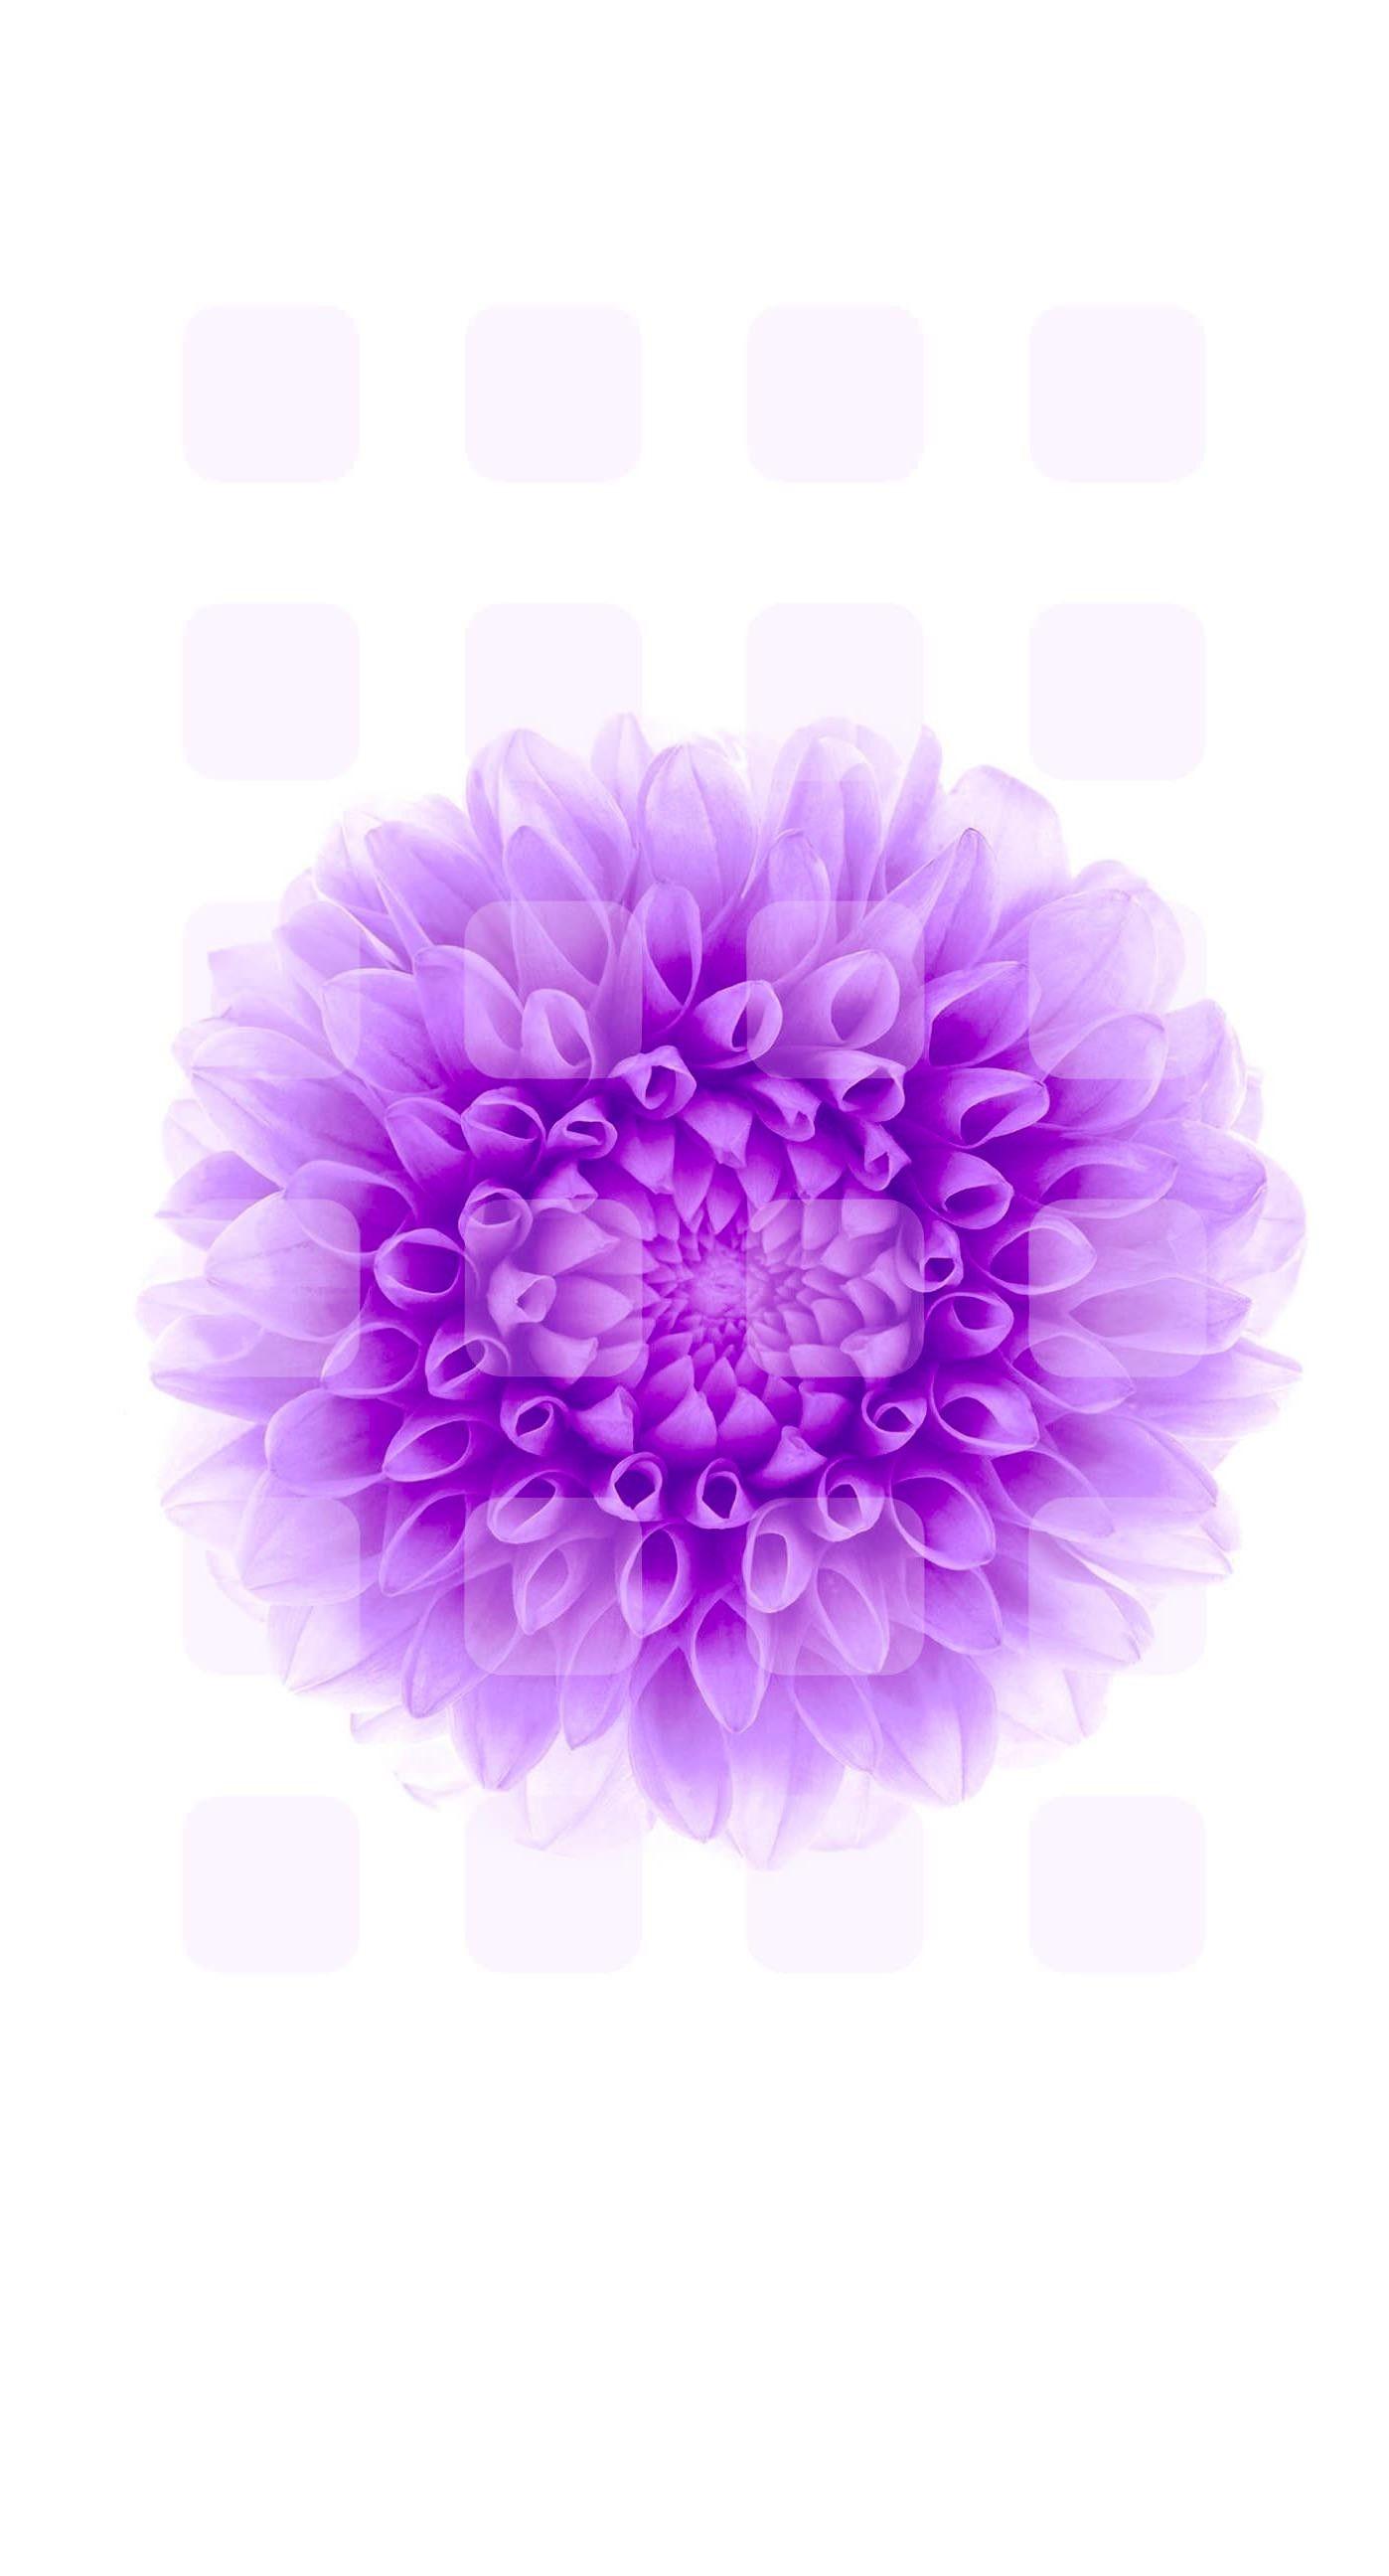 Premium AI Image  A dark purple flower wallpaper for iphone